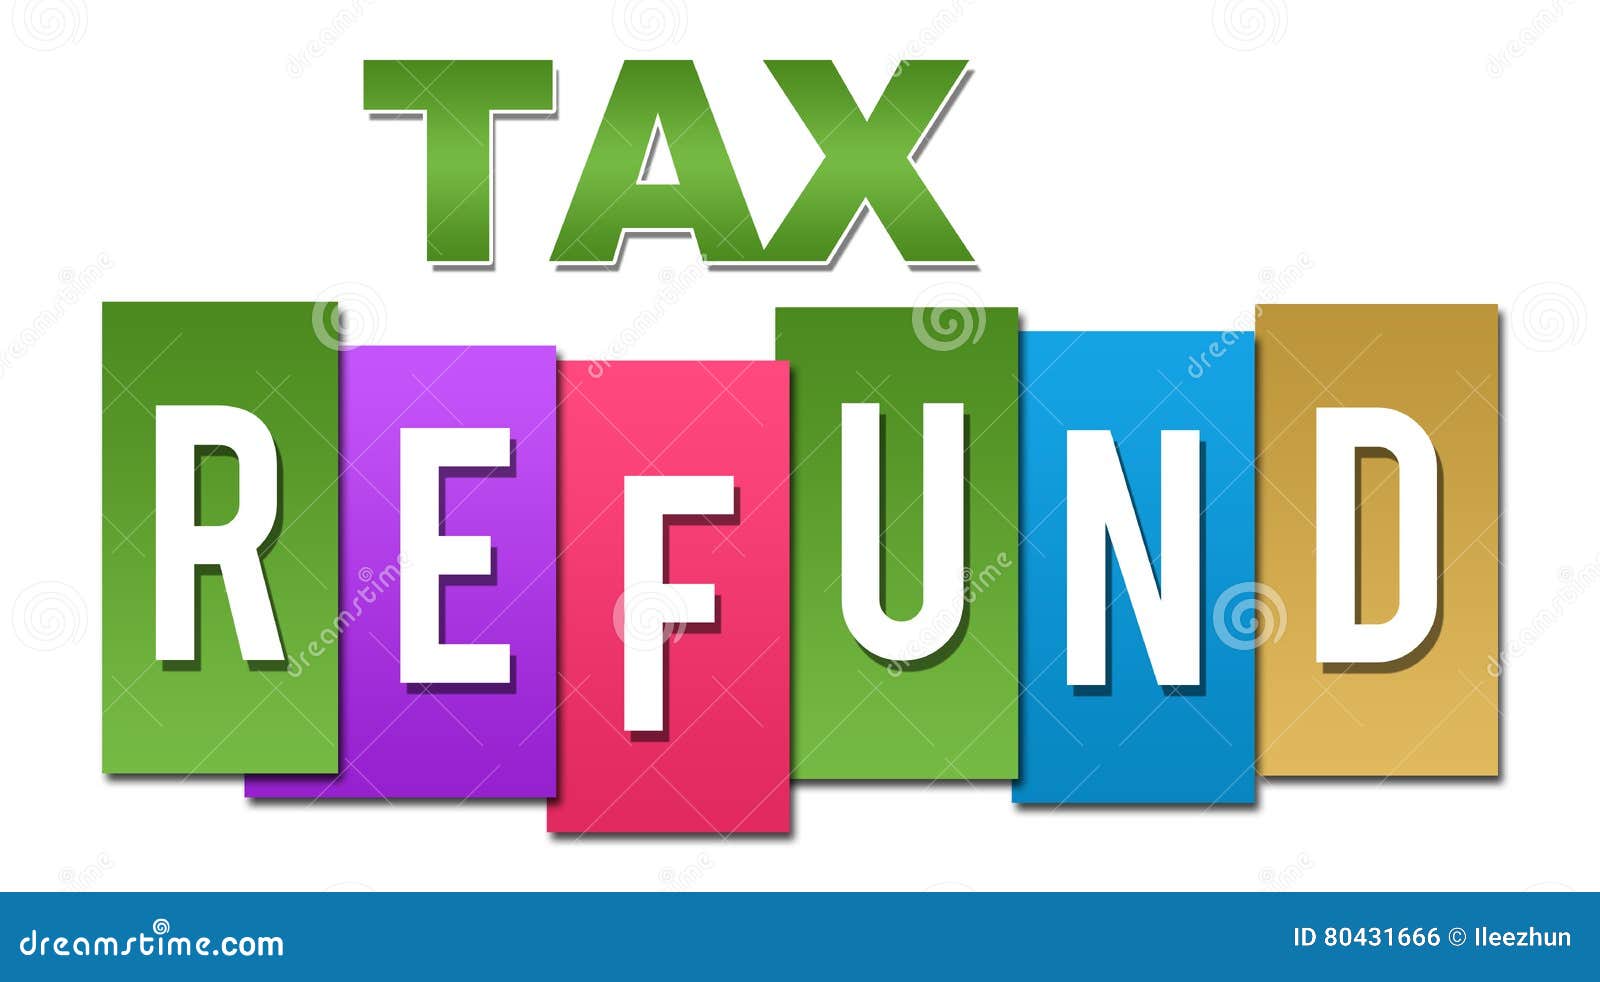 tax-refund-professional-colorful-stock-illustration-illustration-of